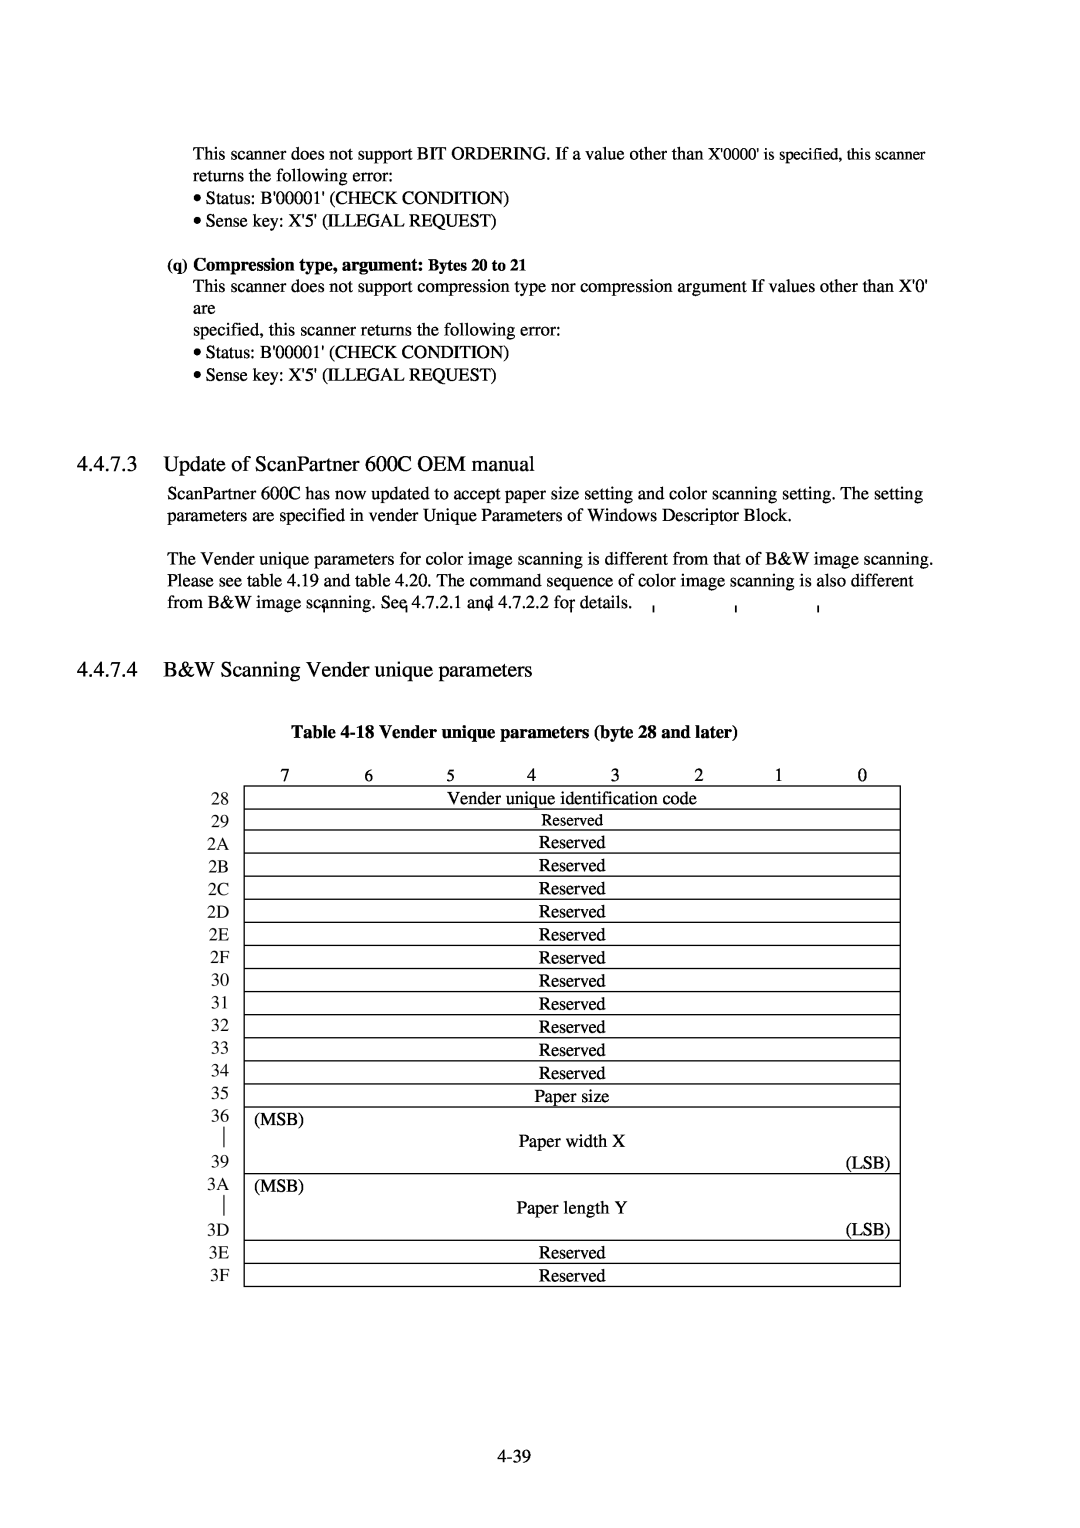 Fujitsu Update of ScanPartner 600C OEM manual, 4.4.7.4 B&W Scanning Vender unique parameters 